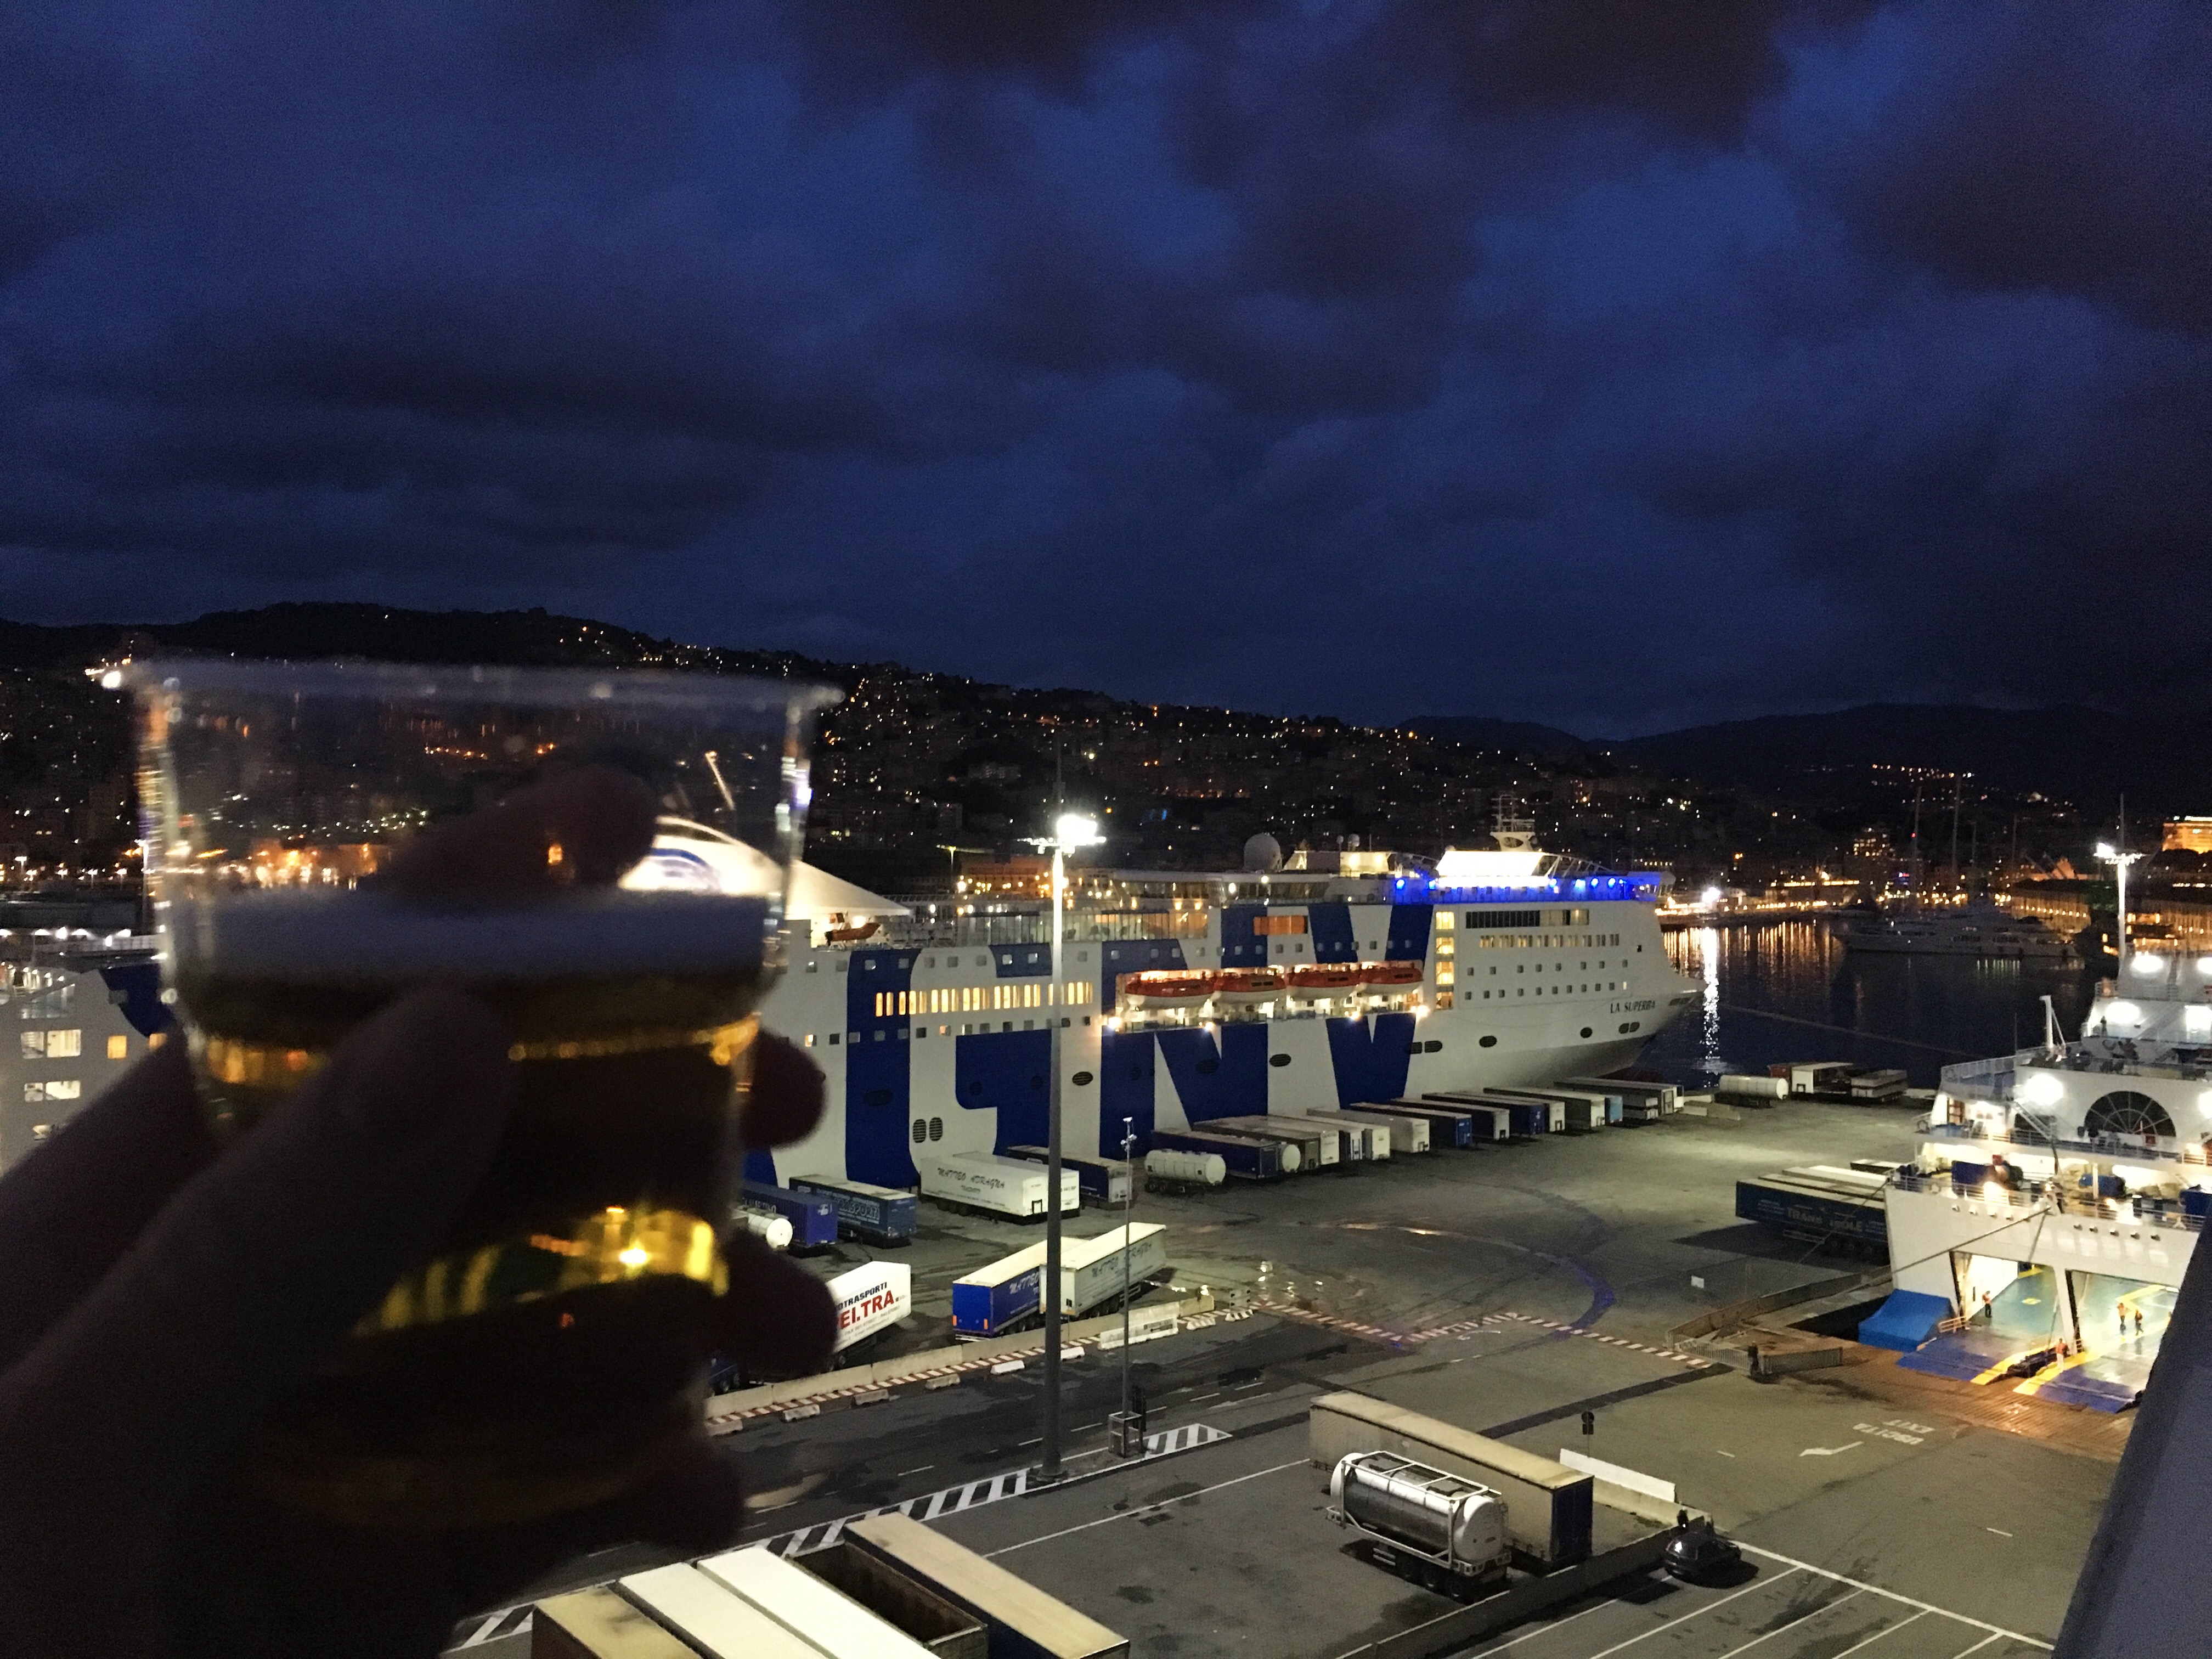 Boarding an overnight ferry from Genova to Sardinia, I say my farewell to a beautiful city and explore the Rhapsody, a ship of Grandi Navi Veloci company.